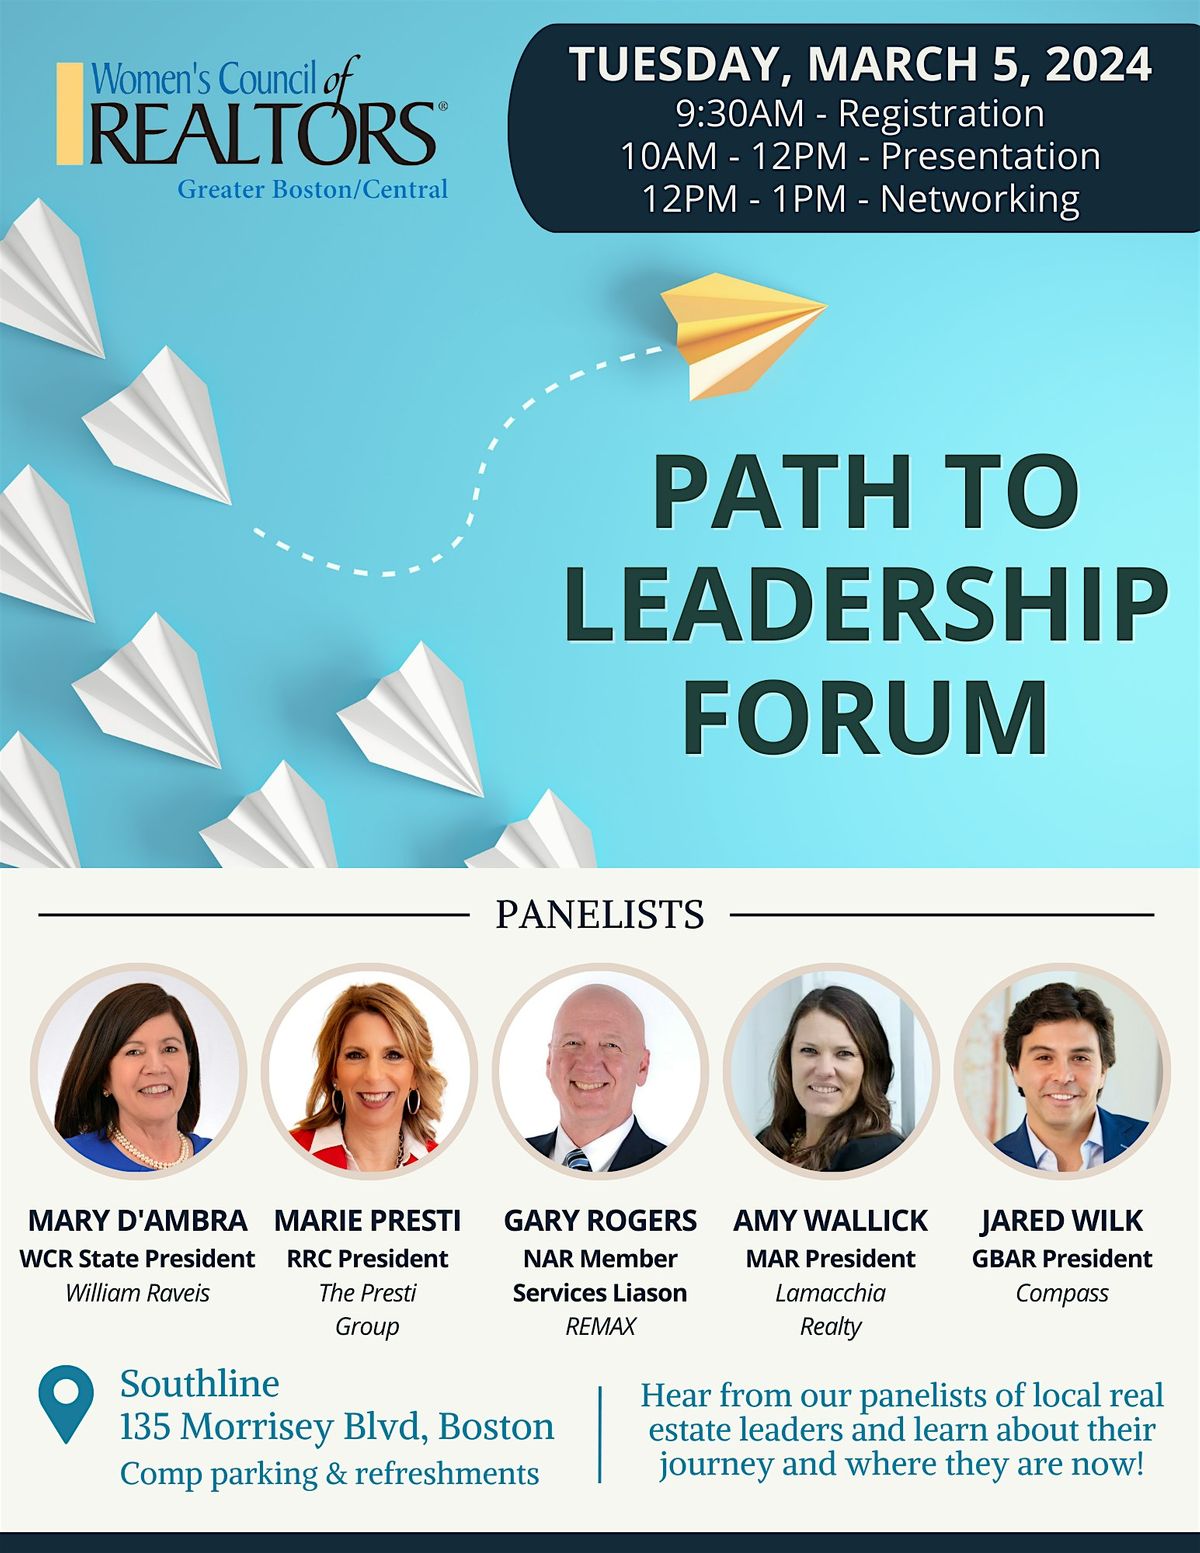 REALTORS - Path to Leadership Forum (GBAR, MAR, NAR, RRC, WCR)